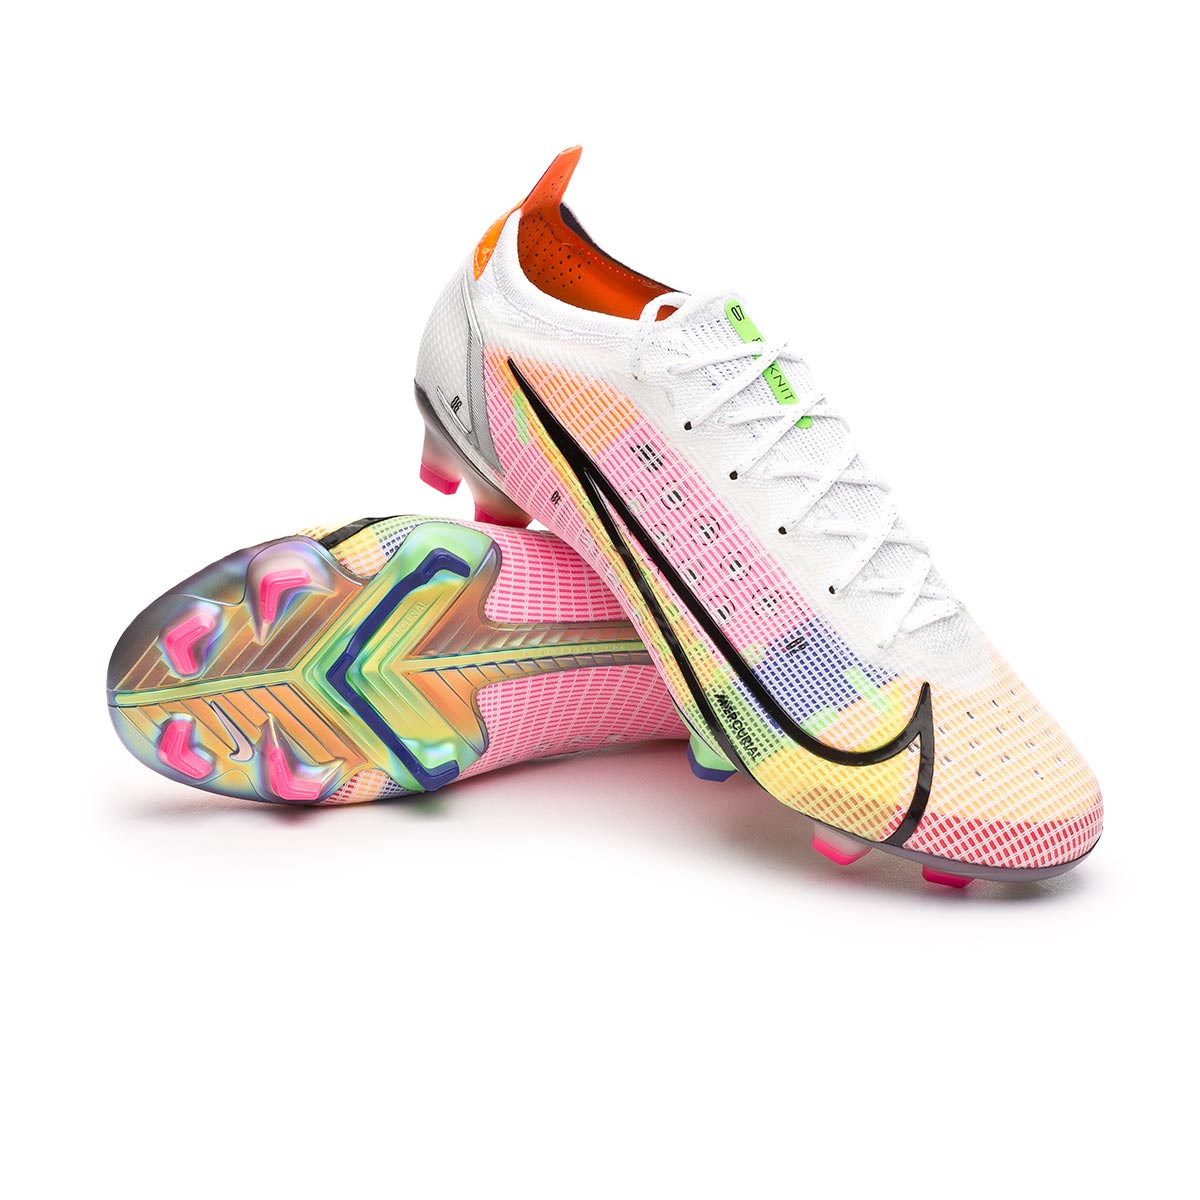 Football Boots Nike Mercurial Vapor 